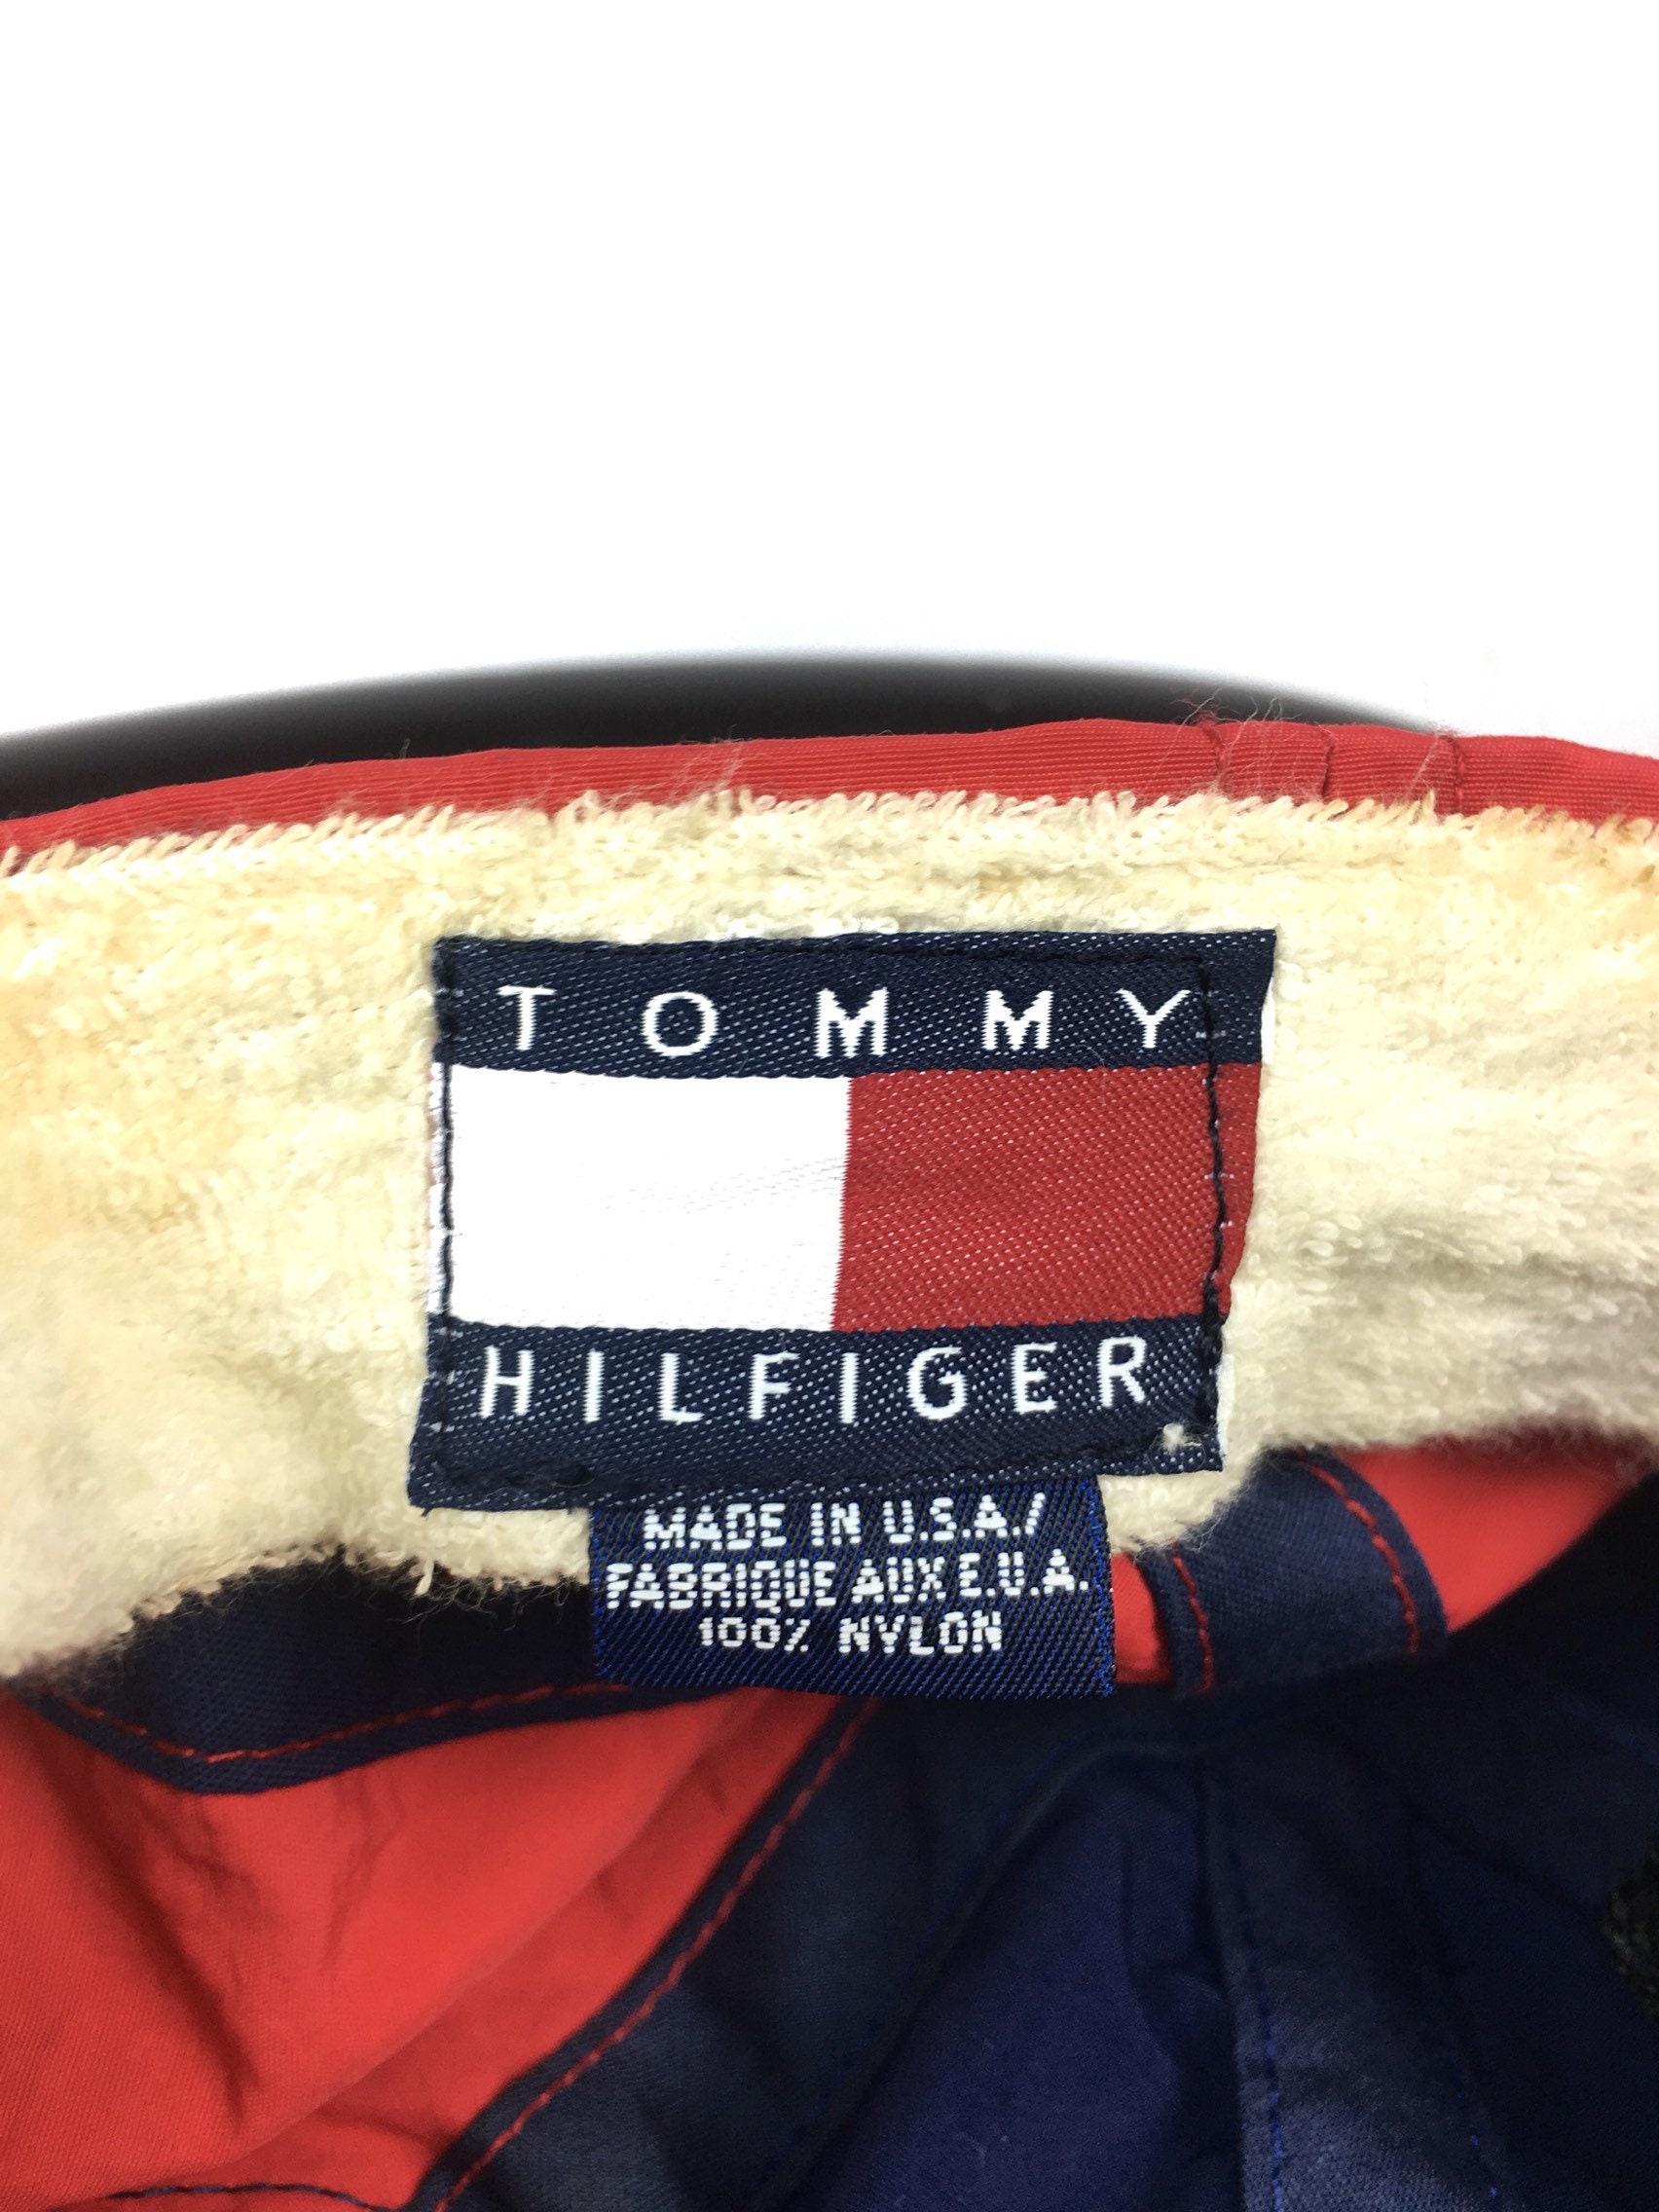 90s TOMMY HILFIGER Dive Search Rescue Hat Cap - Etsy